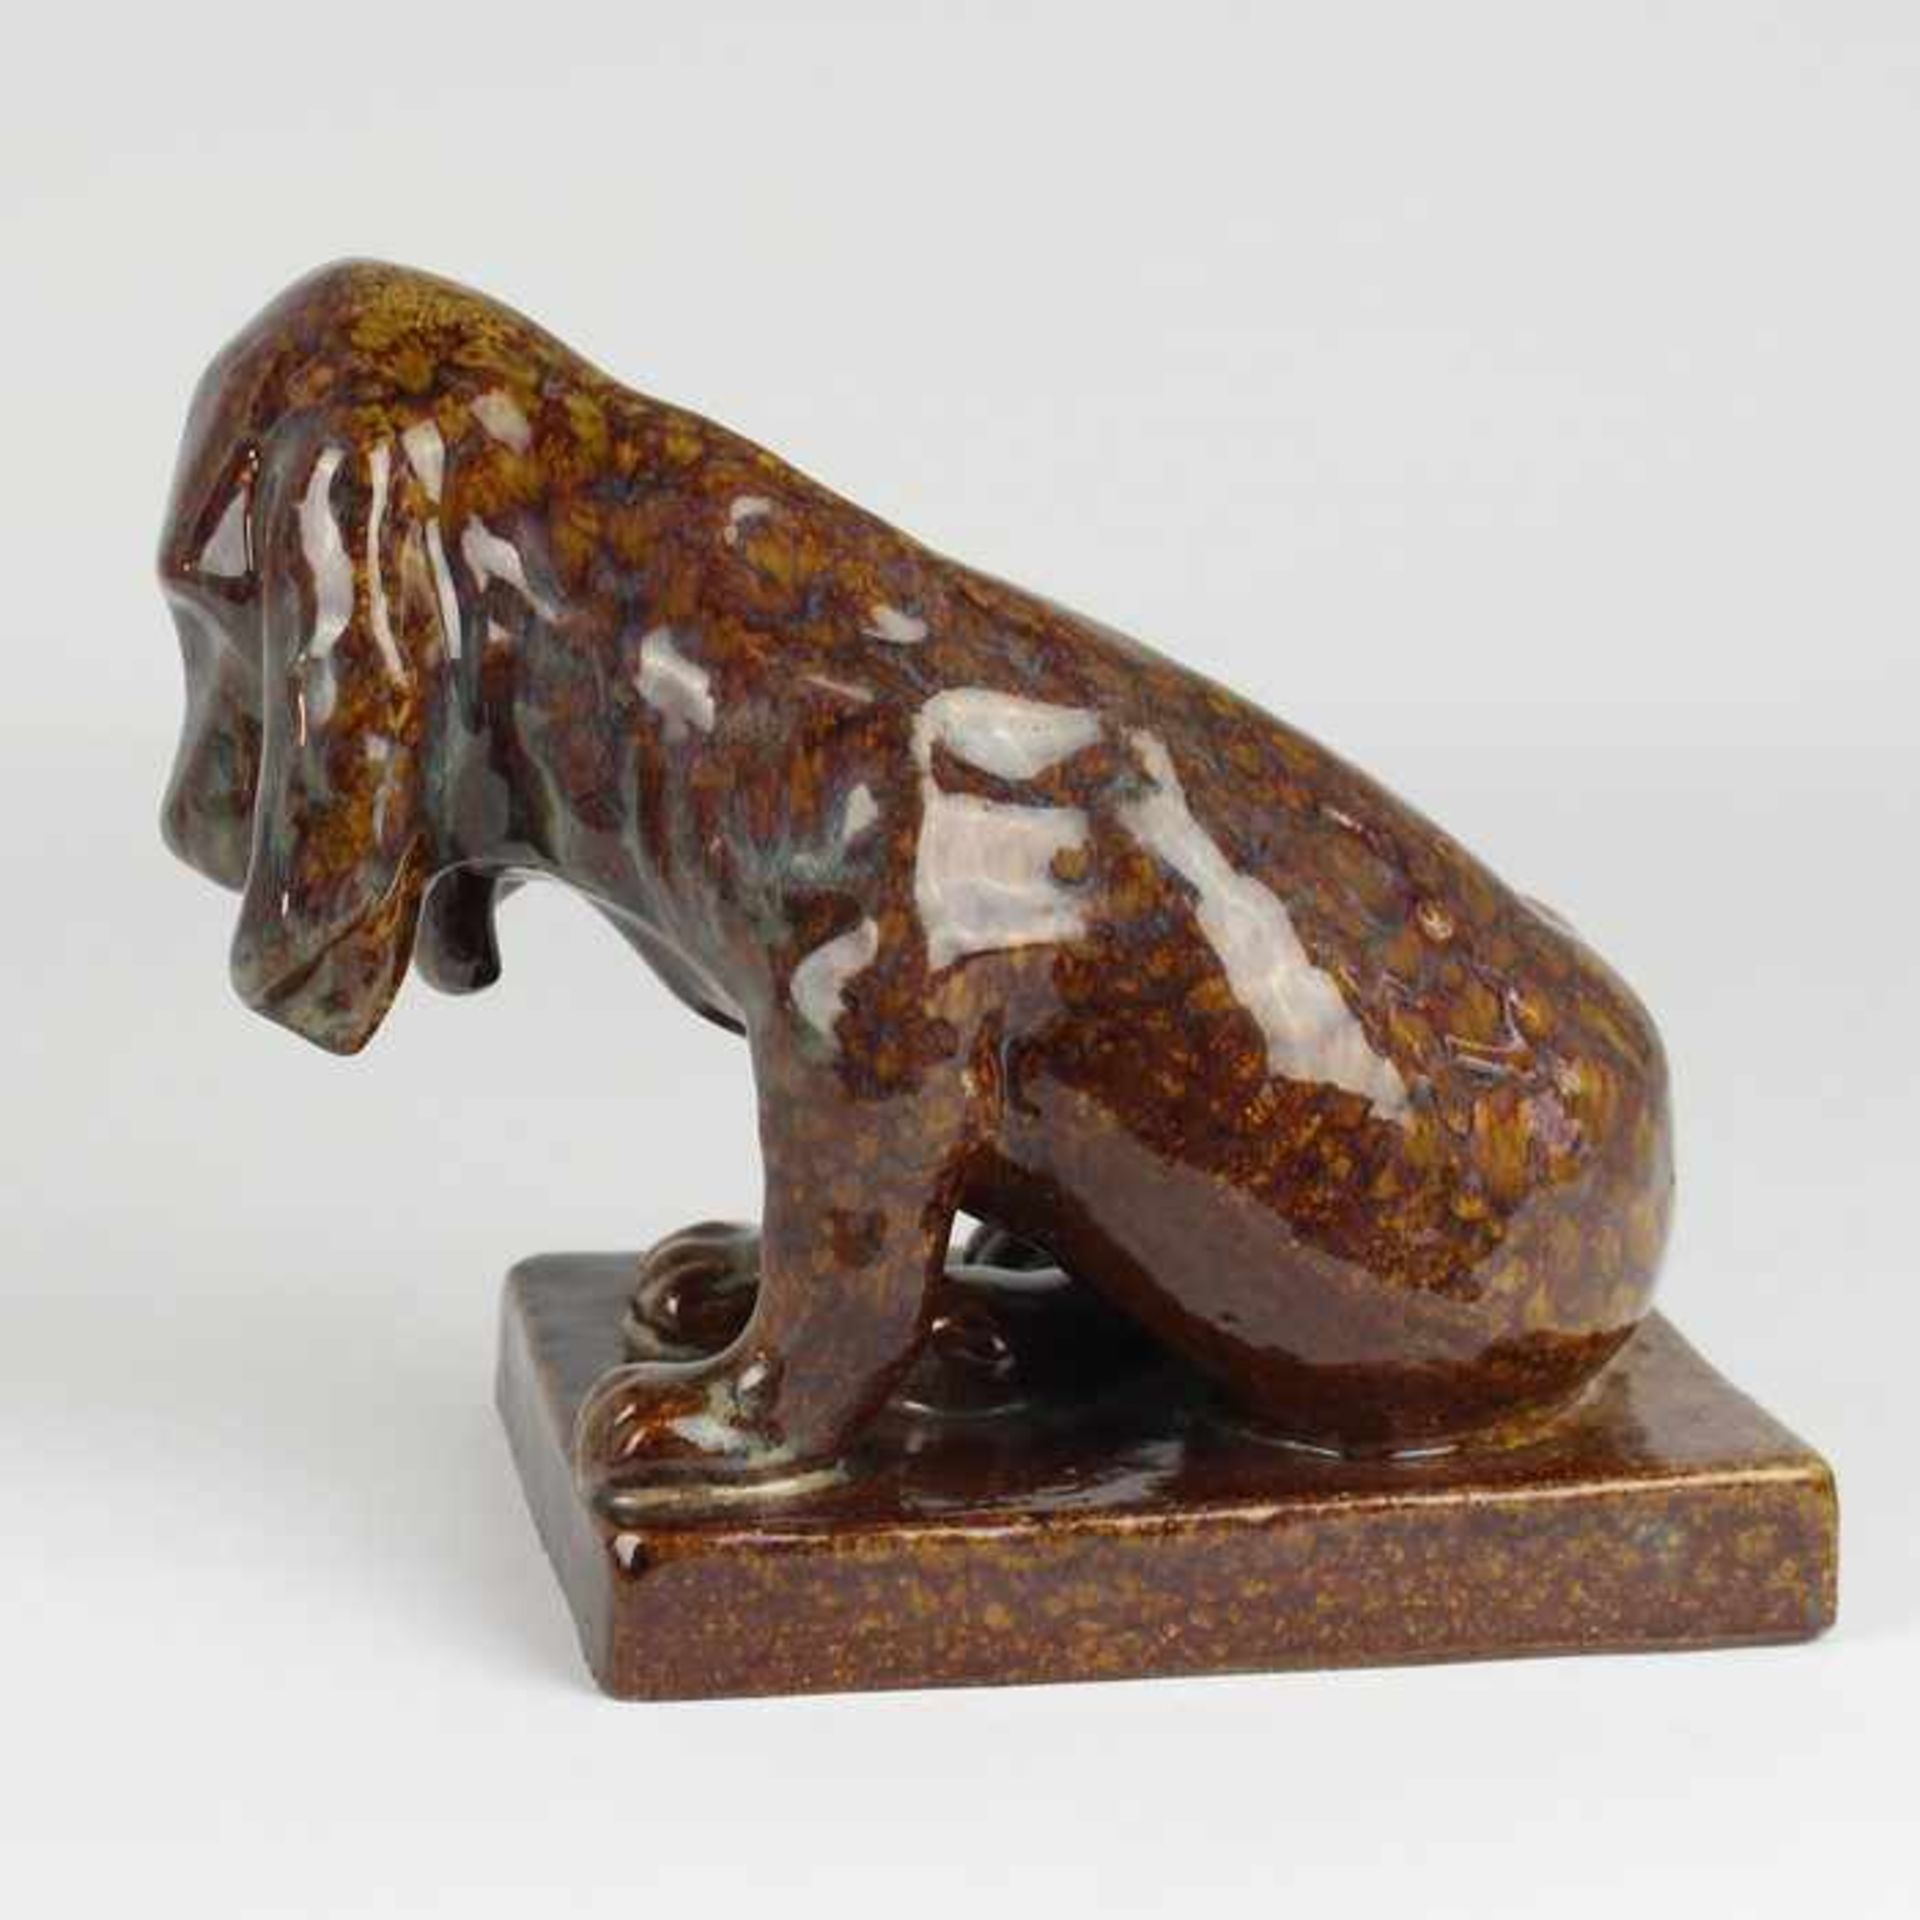 Cytére - Bloodhound Puppyum 1920, 2 Pressstempel, Rambervillers, Frankreich, Entw. Ludwig Habich - Image 2 of 2